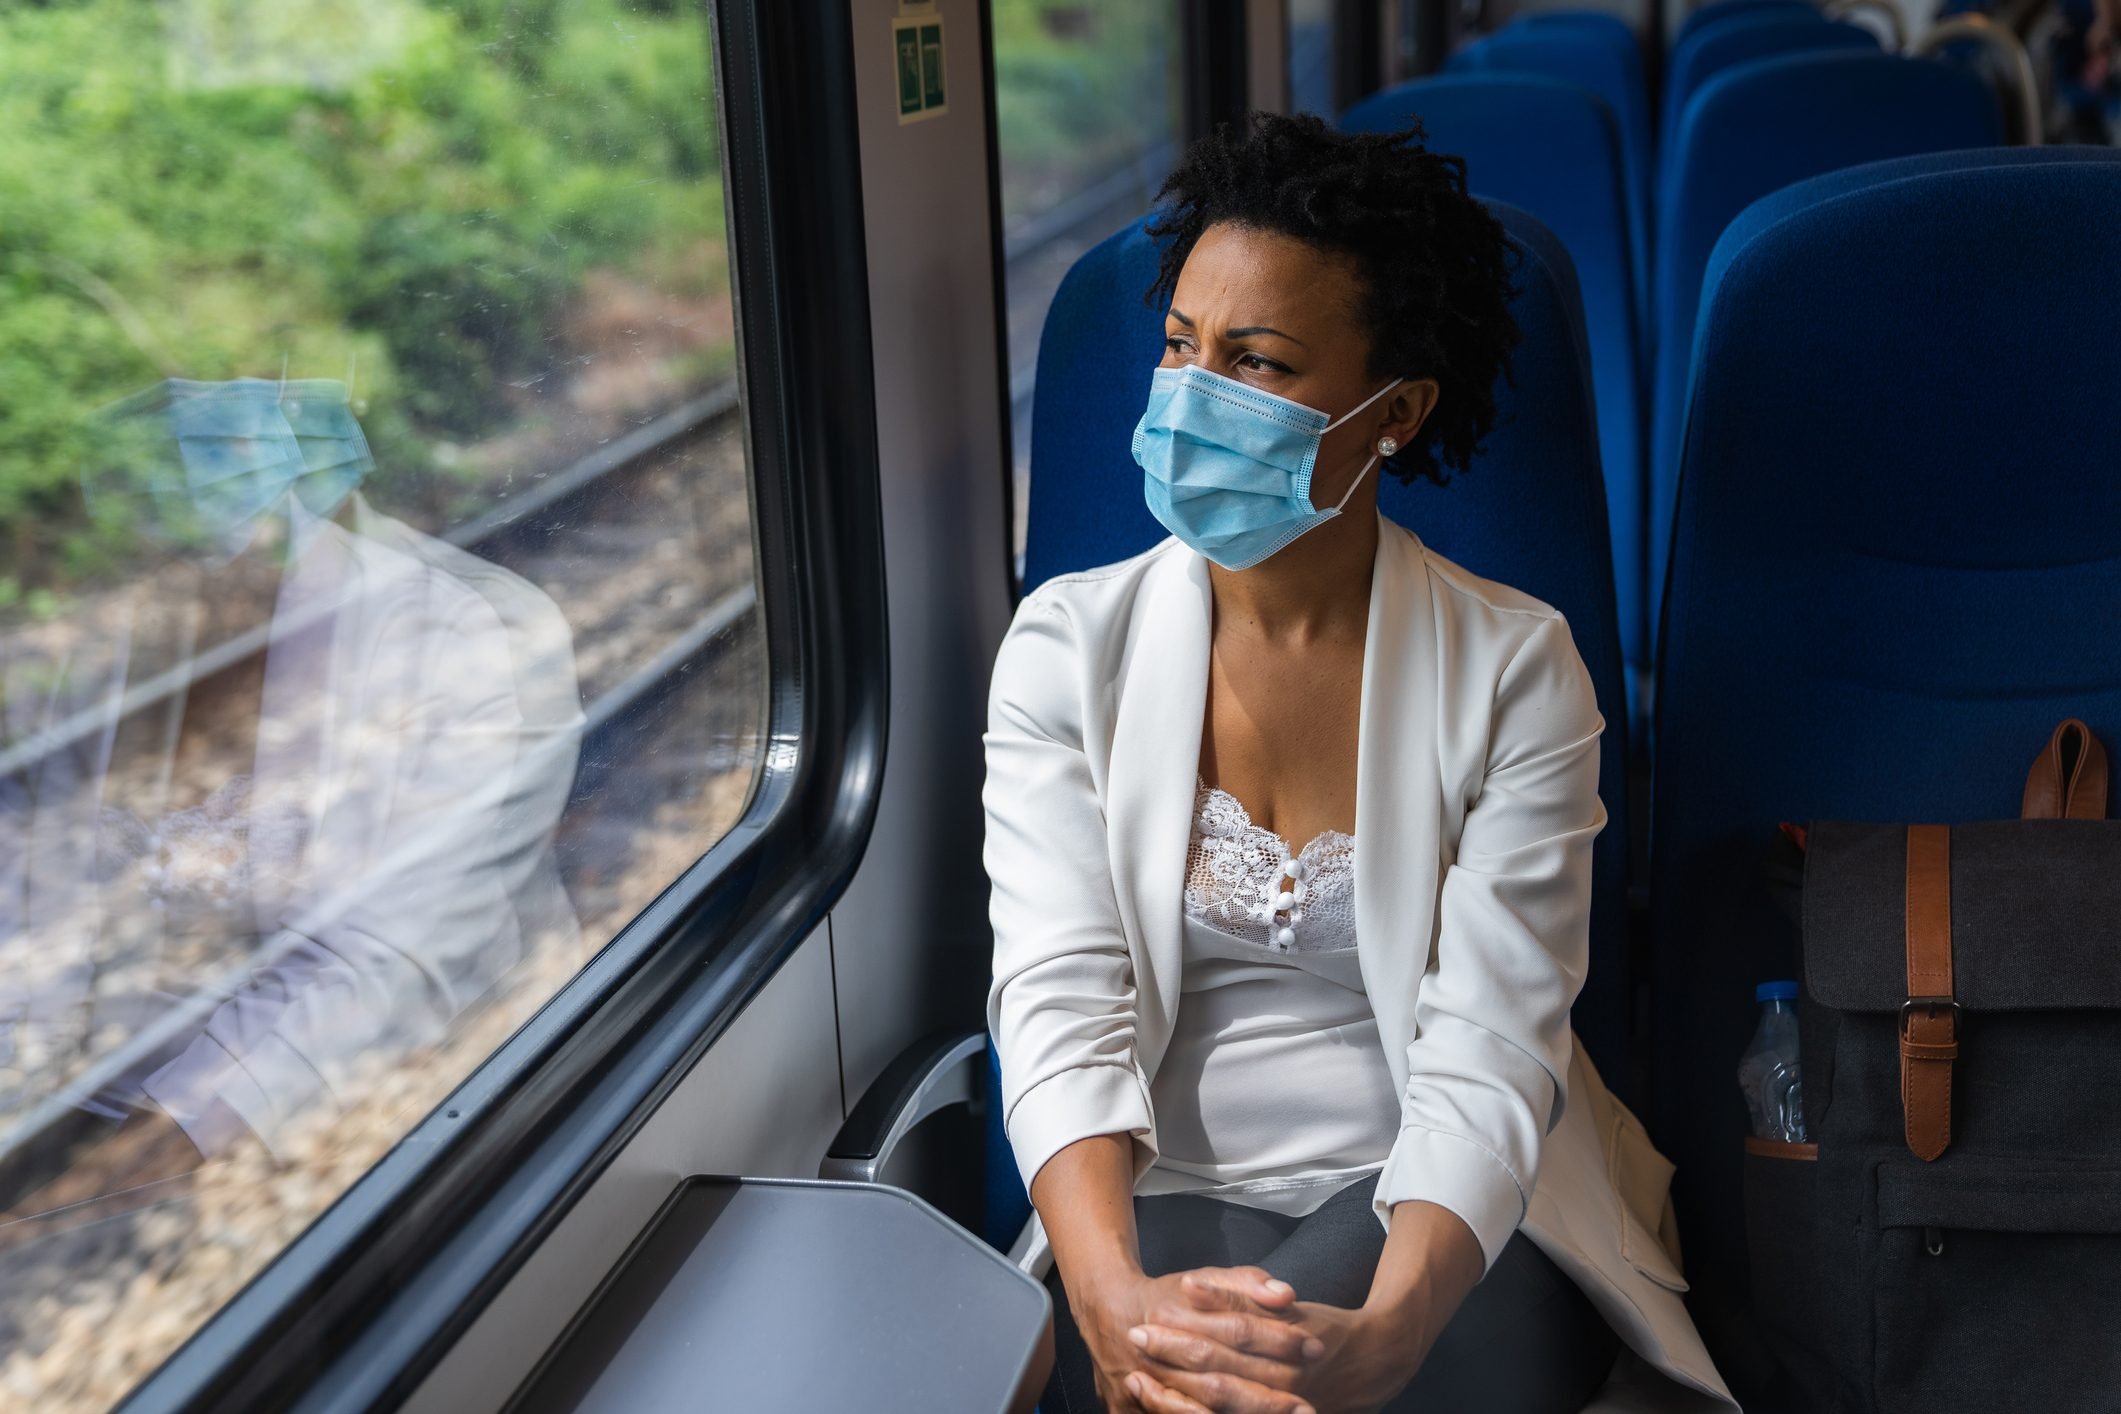 How Can I Avoid Catching Coronavirus on Public Transportation?